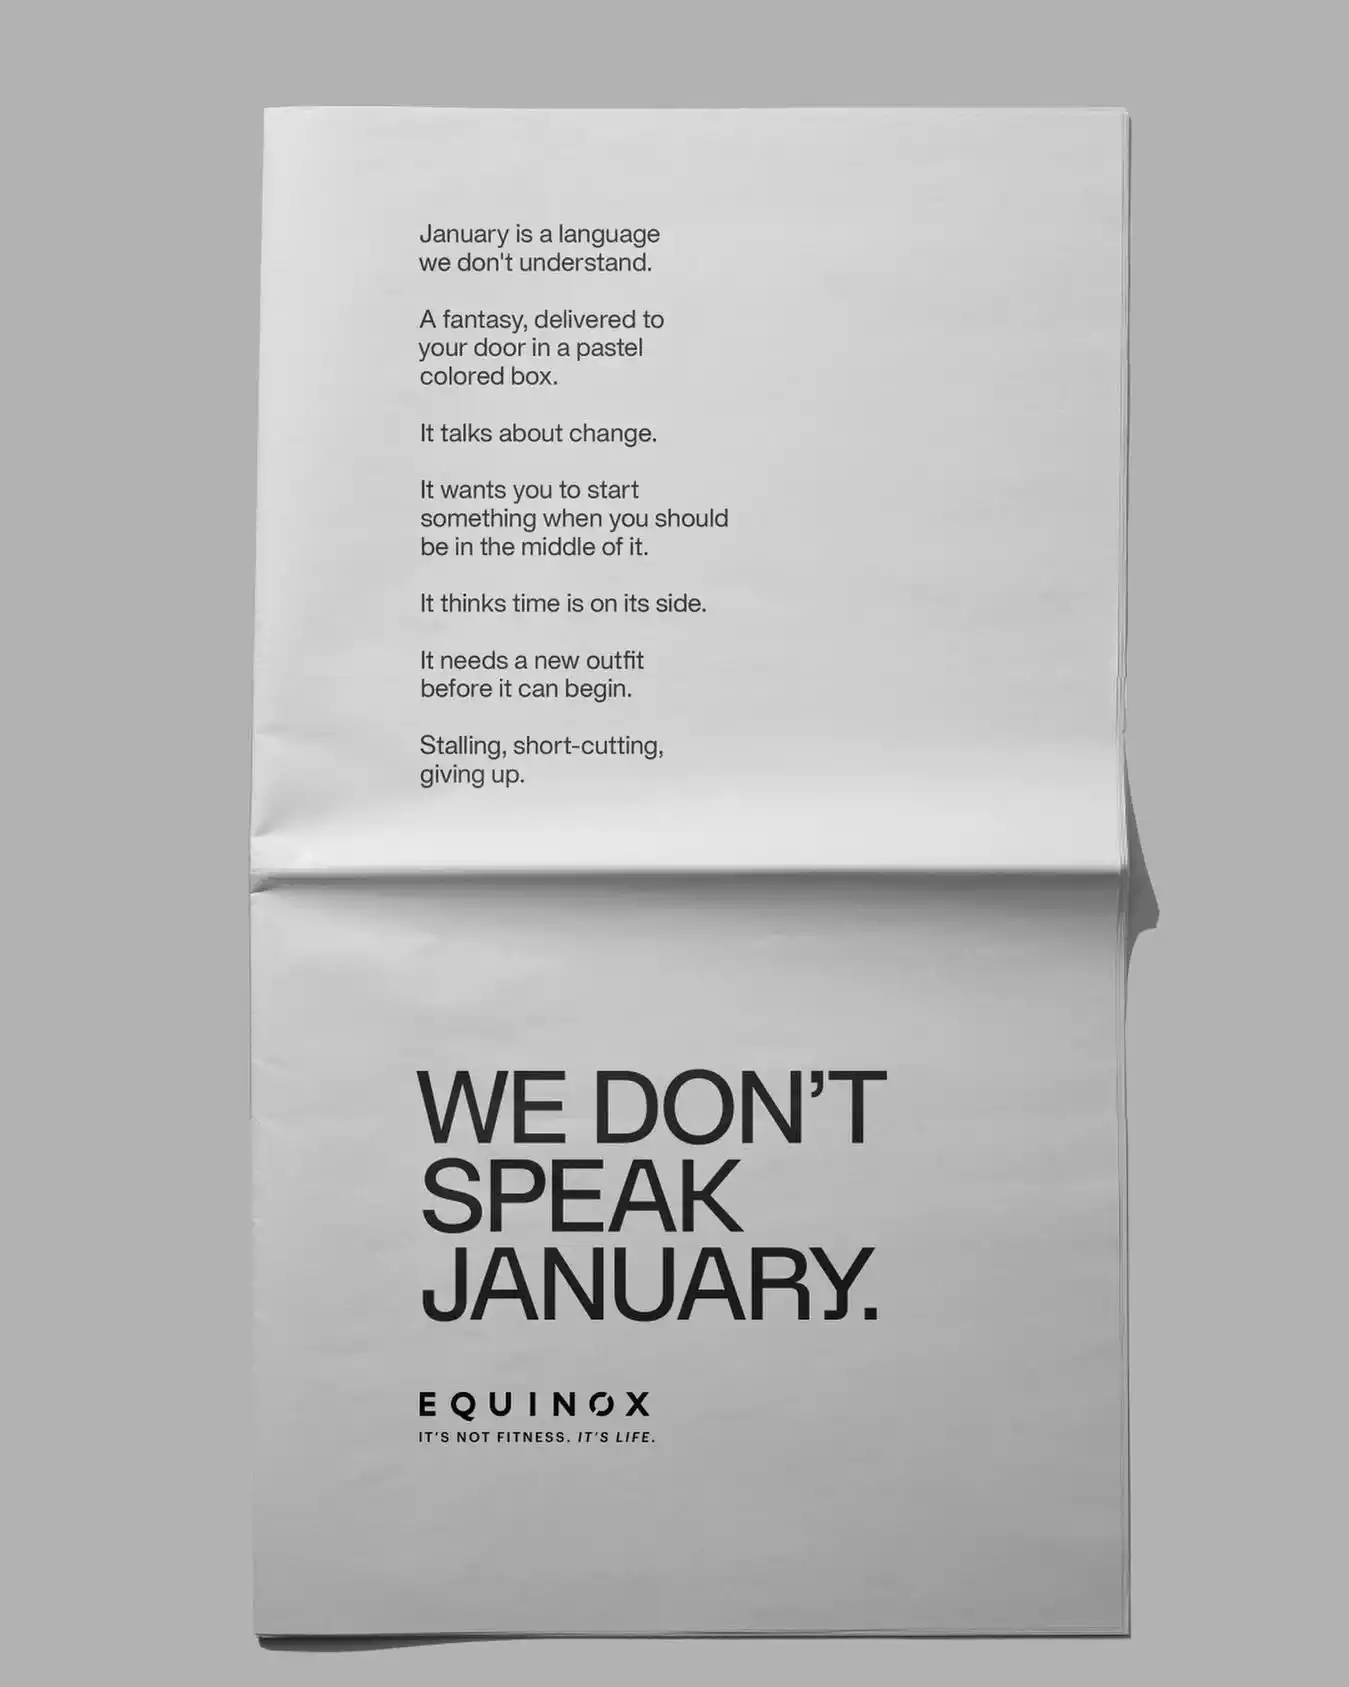 Equinox January 1 message written on paper